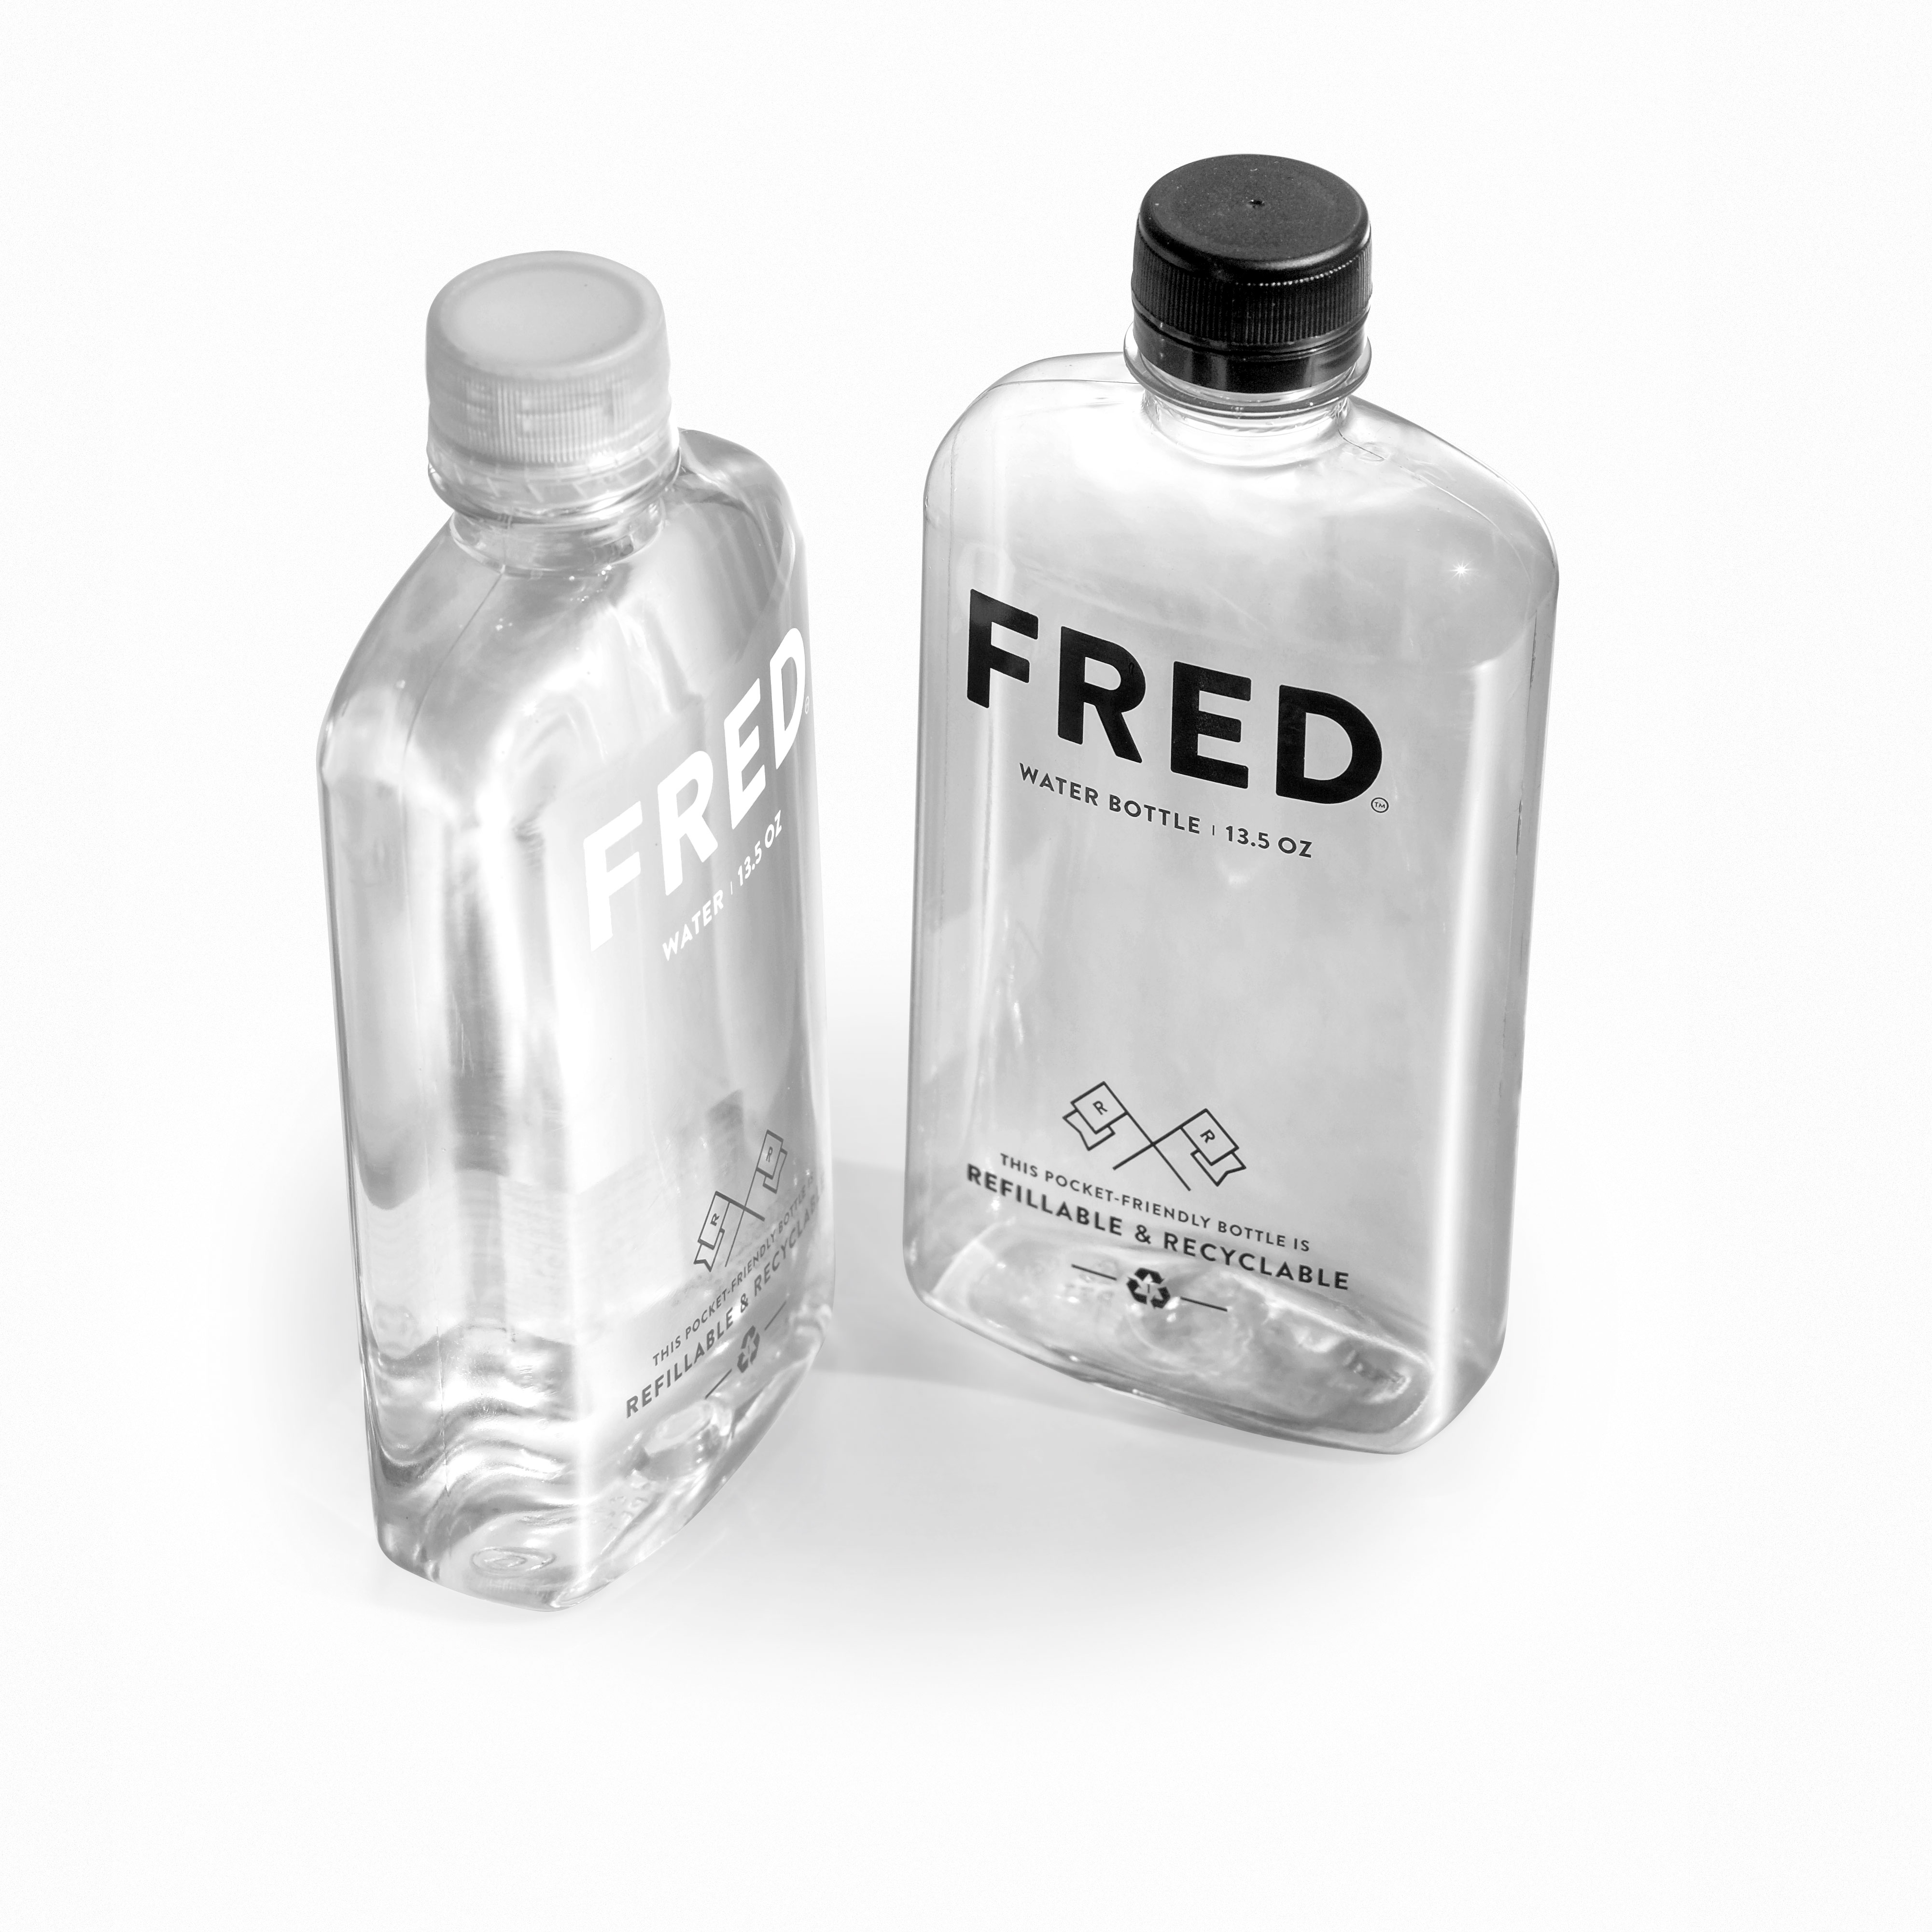 Fred Water Bottle 13 5 Oz Best Pictures And Decription Forwardsetcom 1557